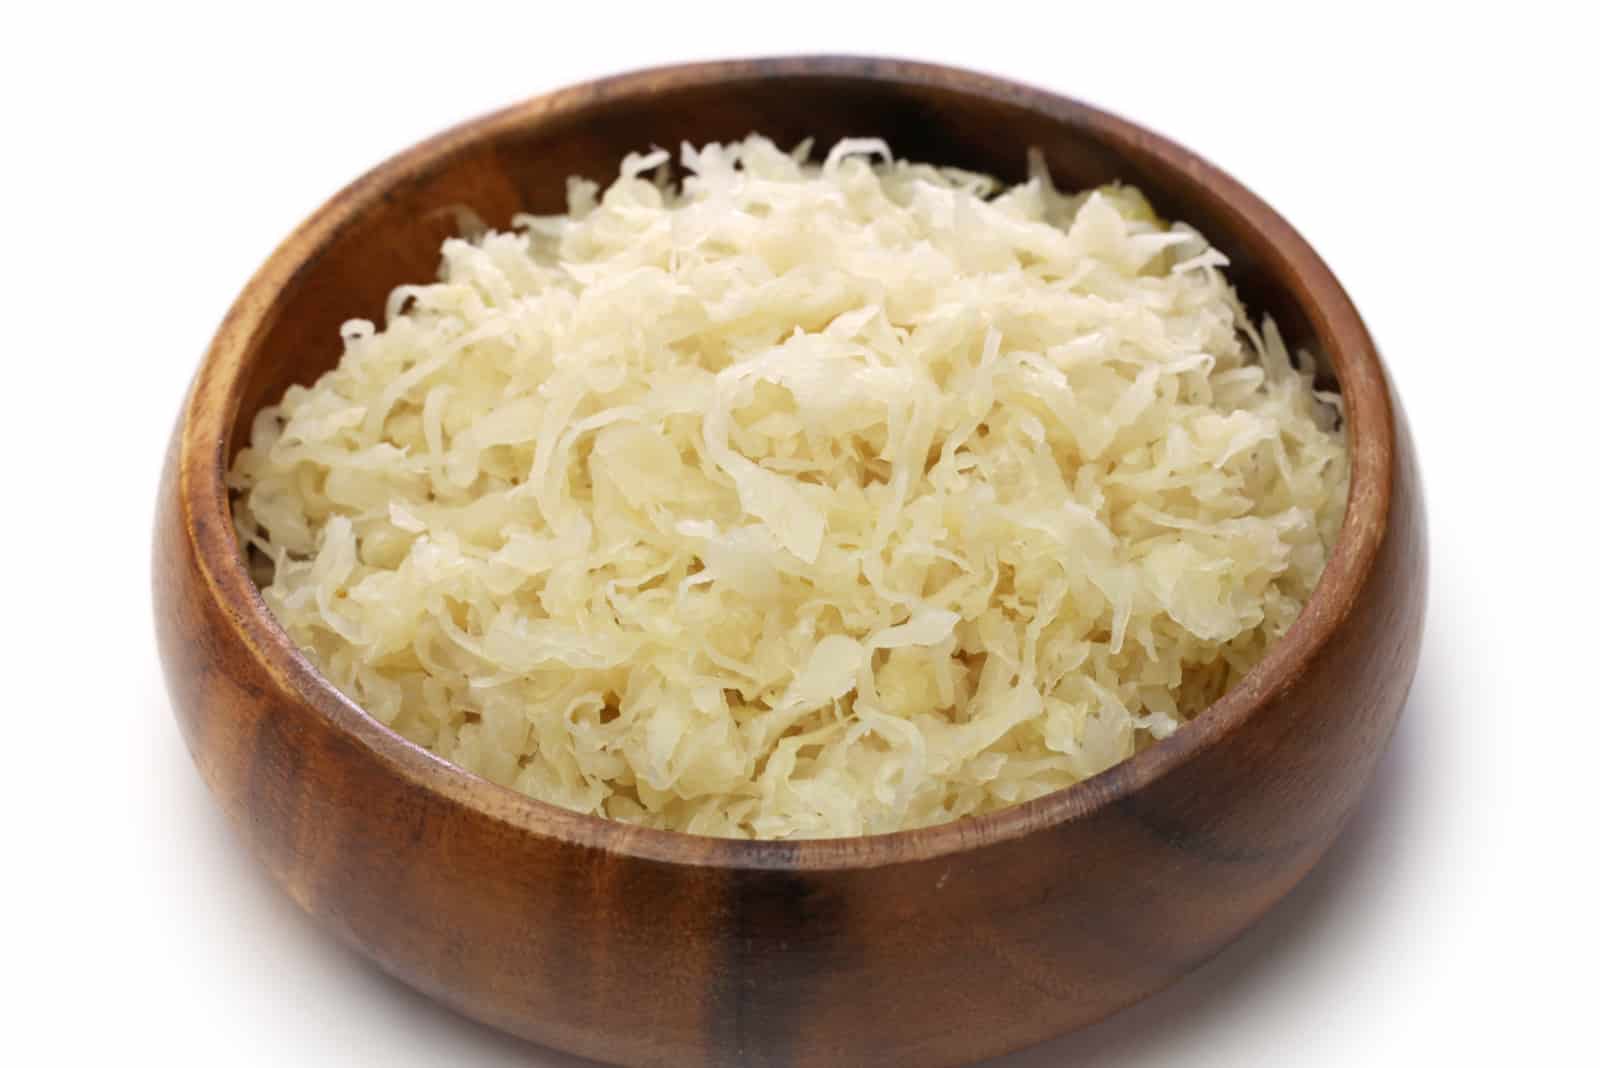 finely chopped sauerkraut in a wooden bowl